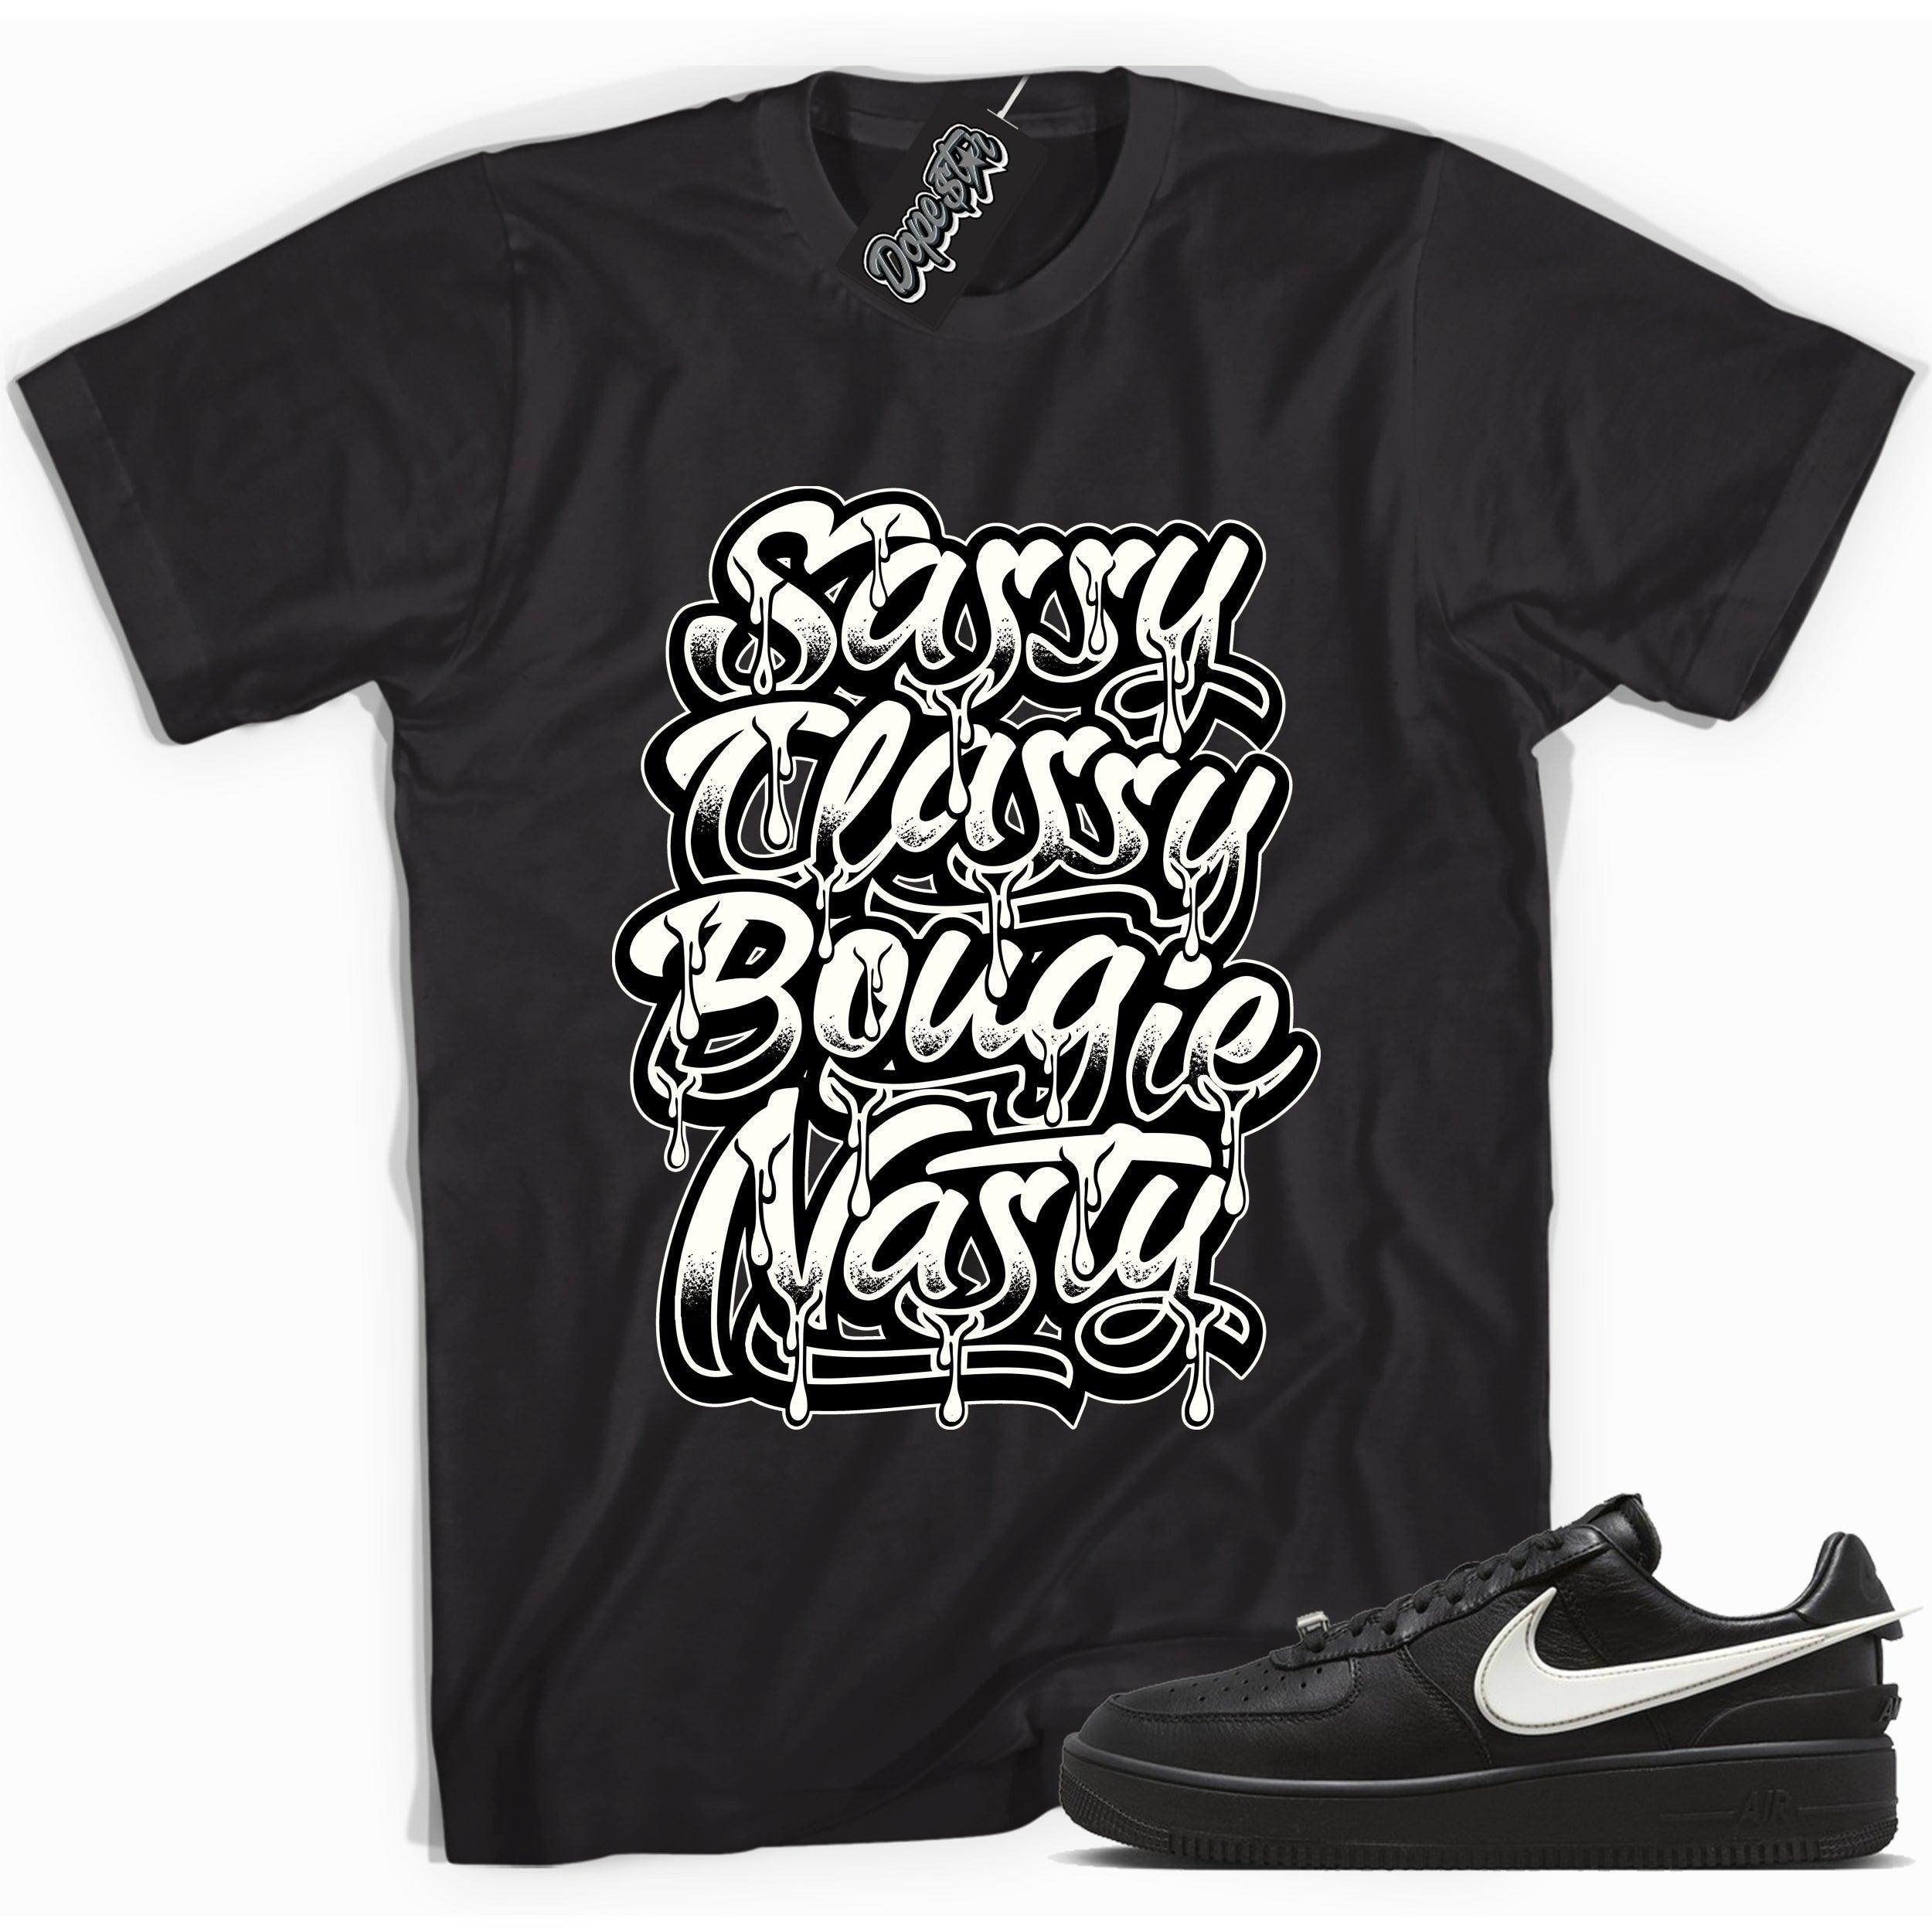 Nike Air Force 1 Low SP Ambush Phantom - Sassy Classy Bougie Nasty - Sneaker Shirts Outlet